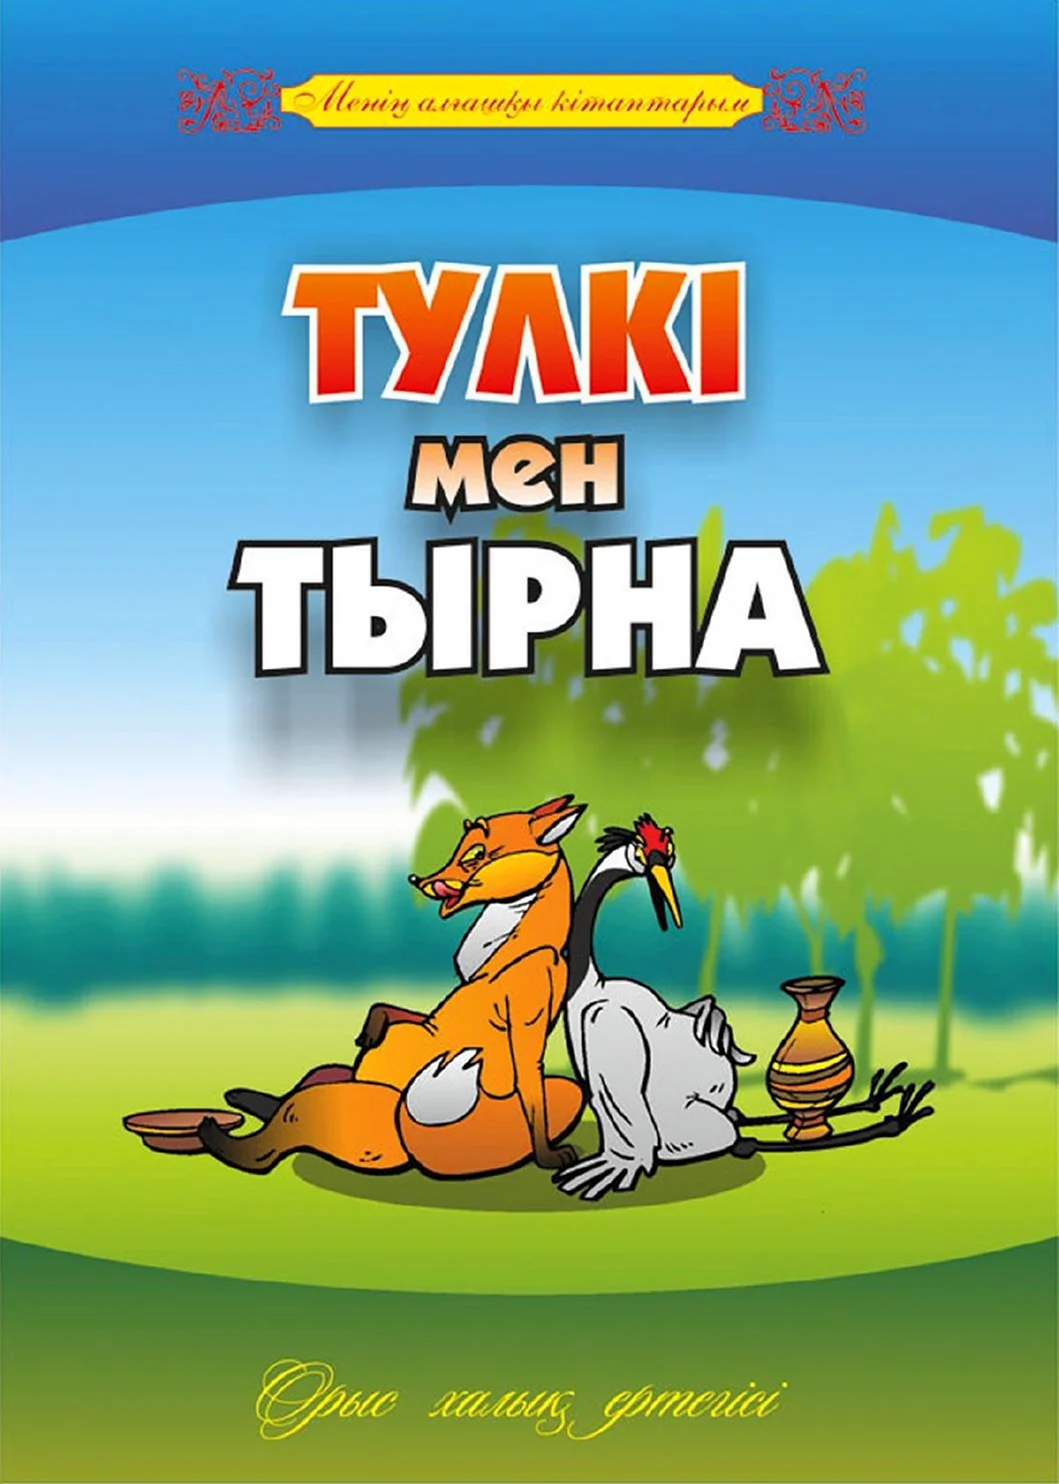 Сказка на казахском языке